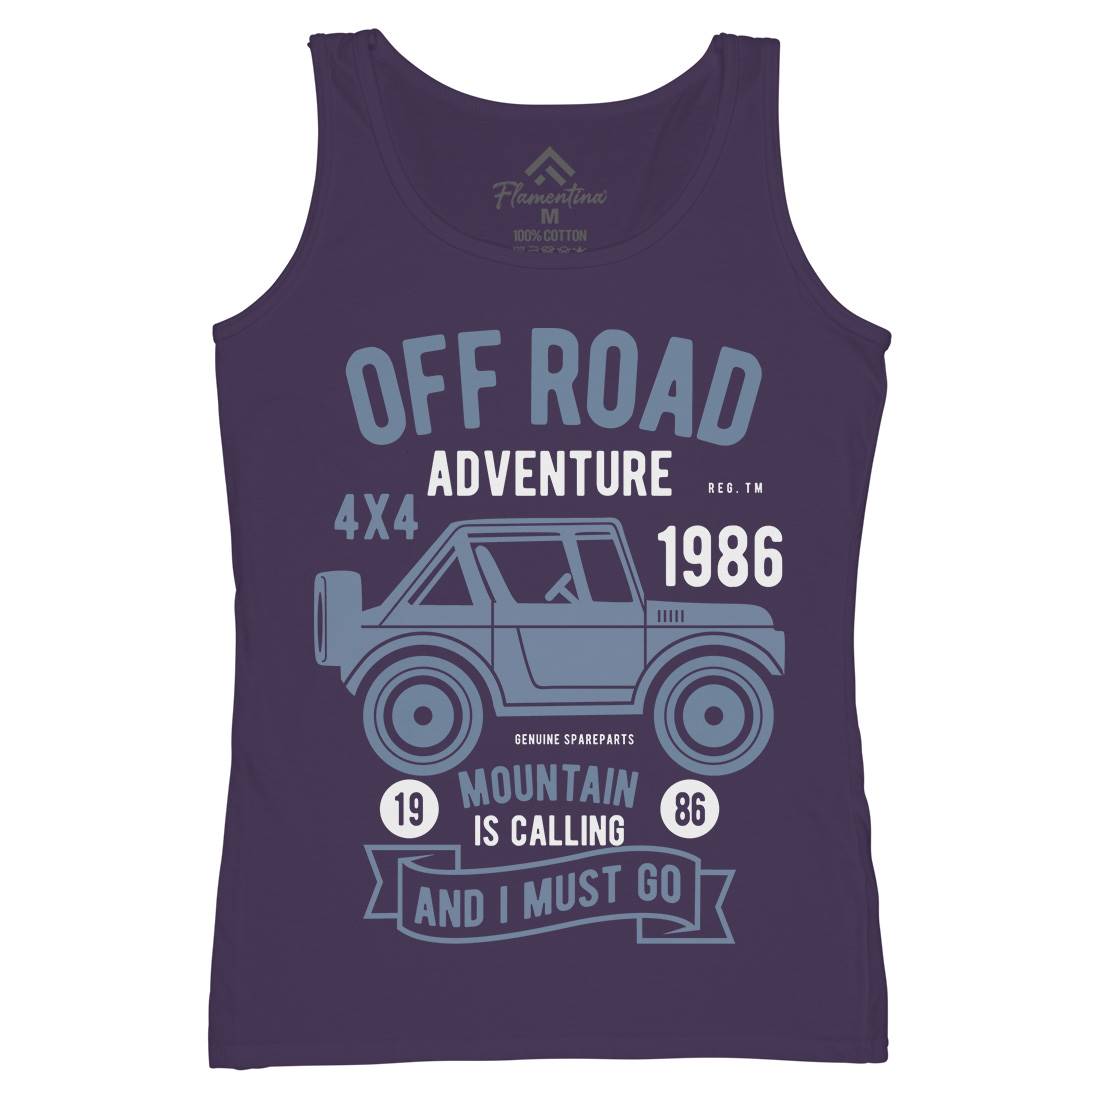 Off Road Adventure Womens Organic Tank Top Vest Cars B432